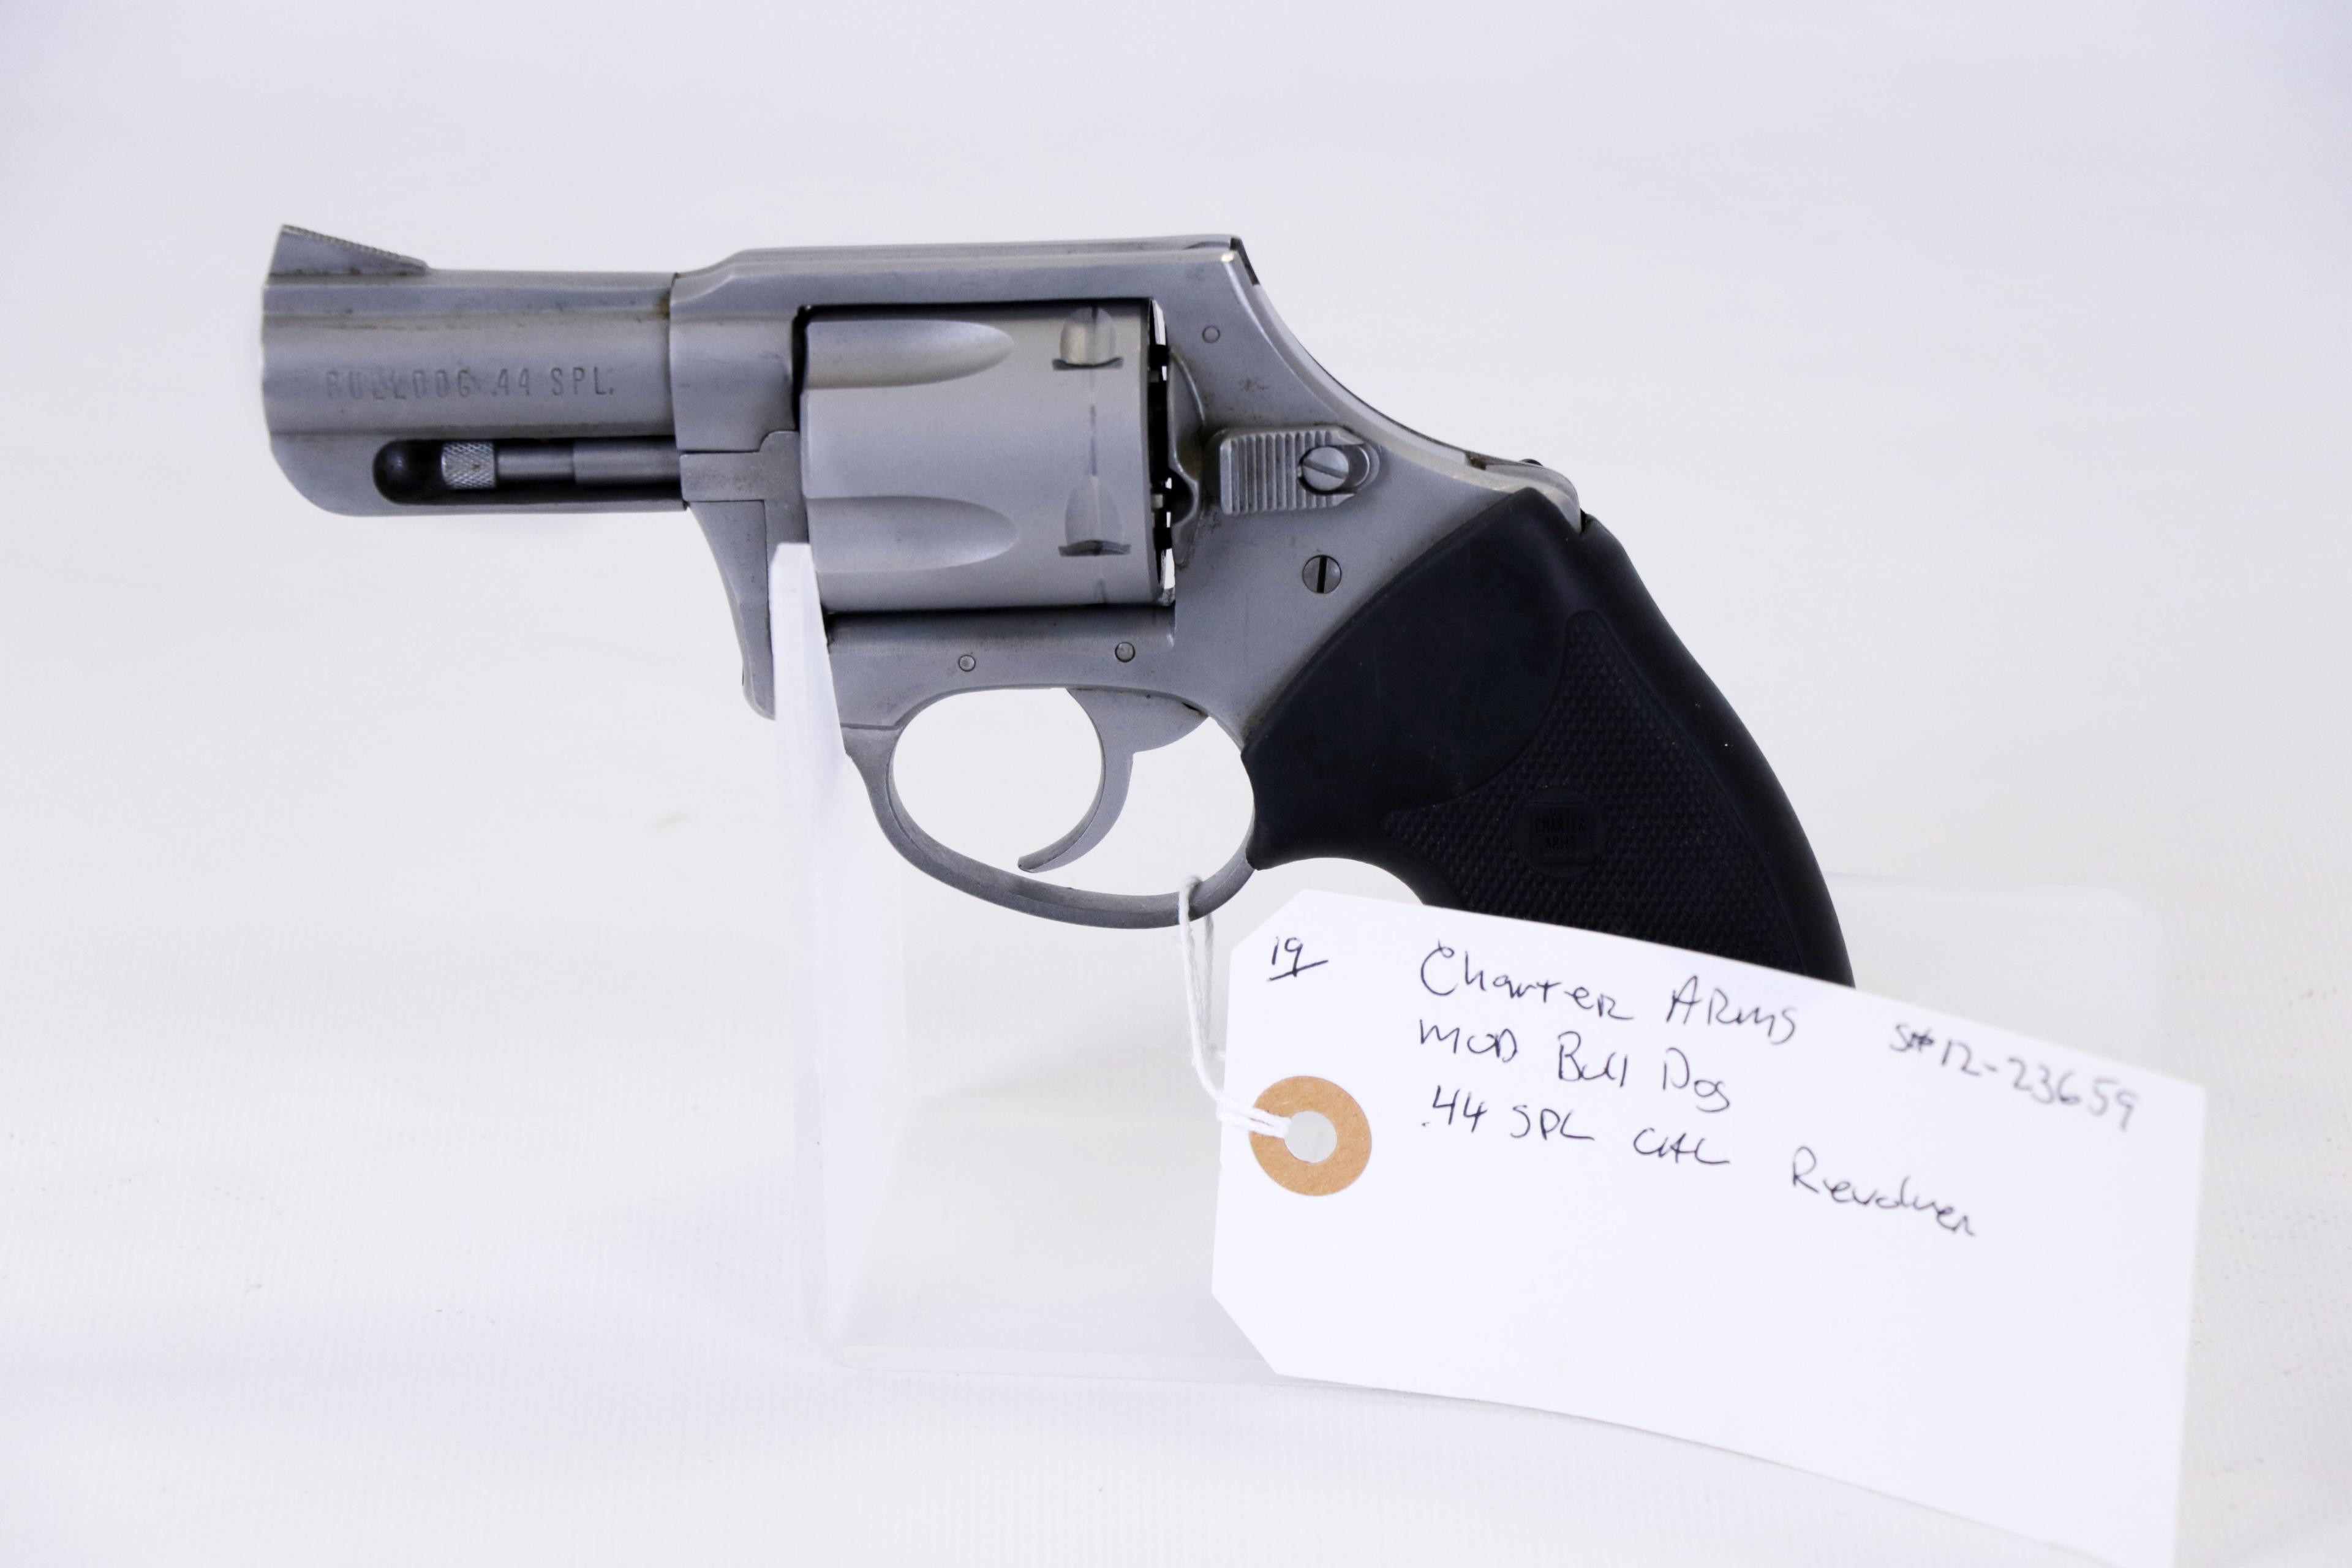 Charter Arms mod Bull Dog .44 spl cal revolver